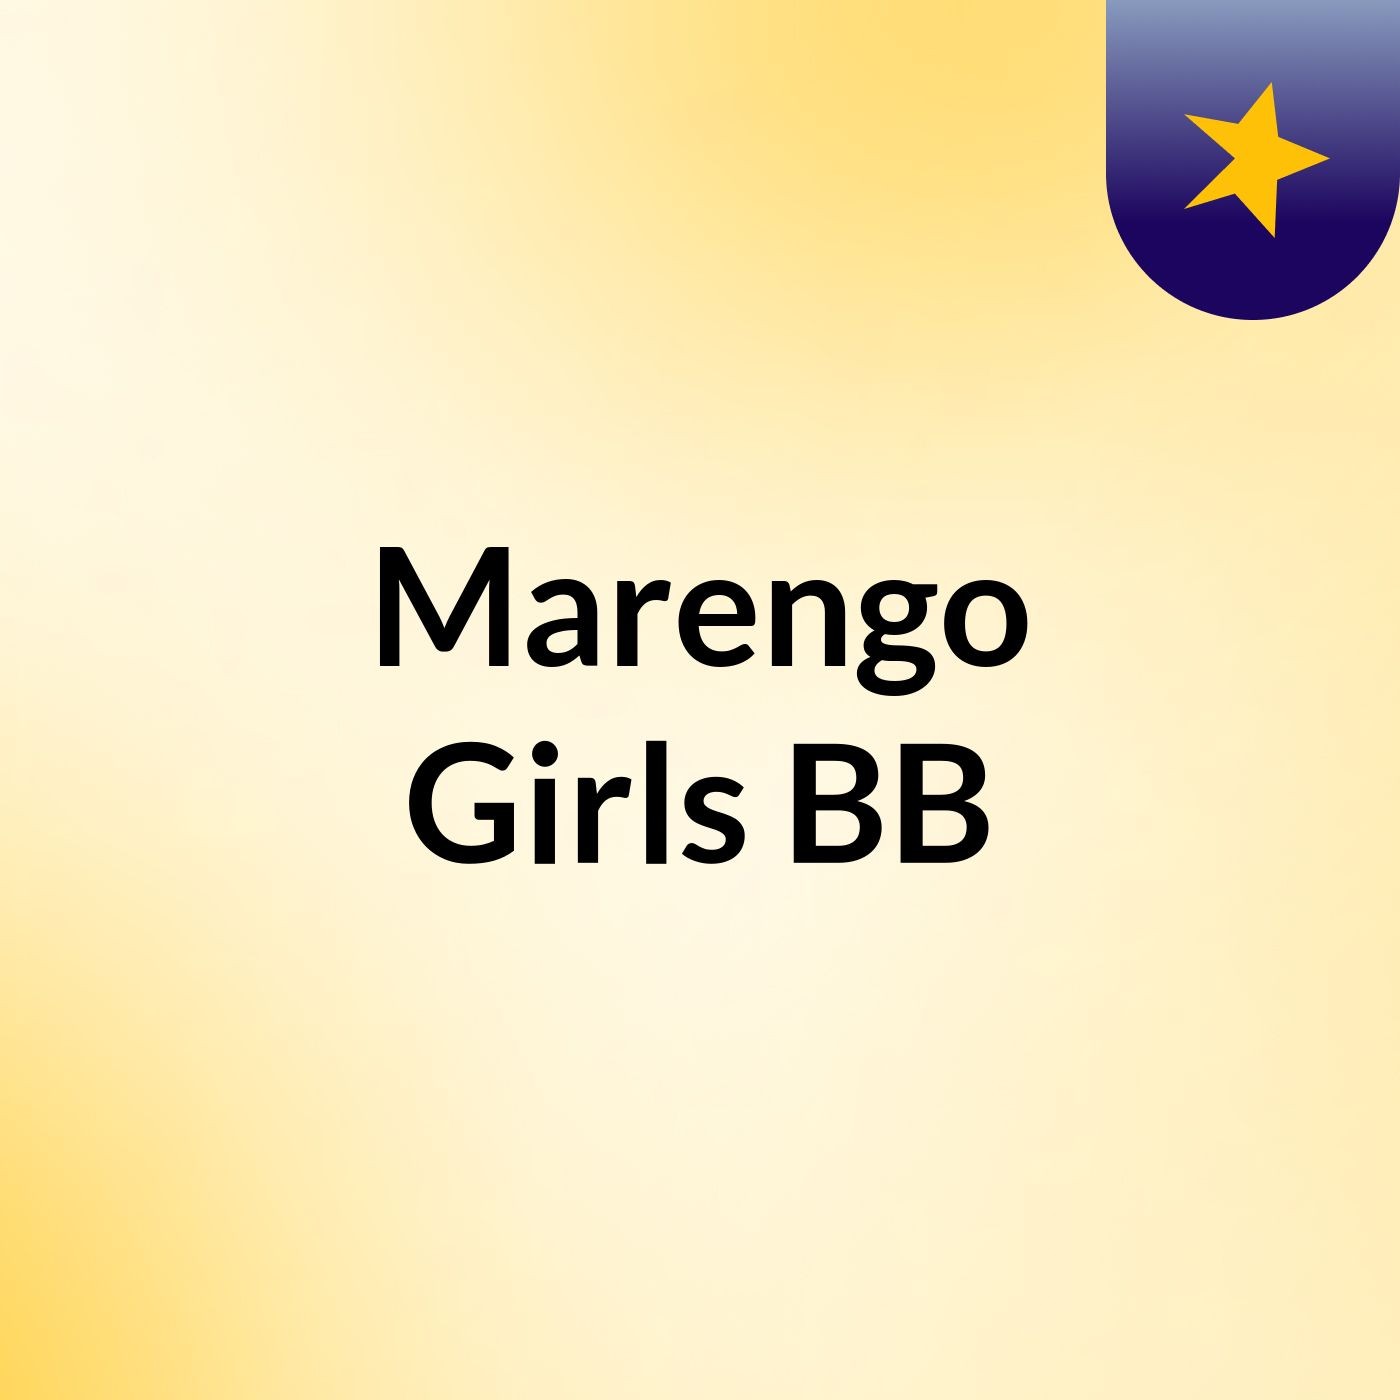 Marengo Girls BB 02/07/2020